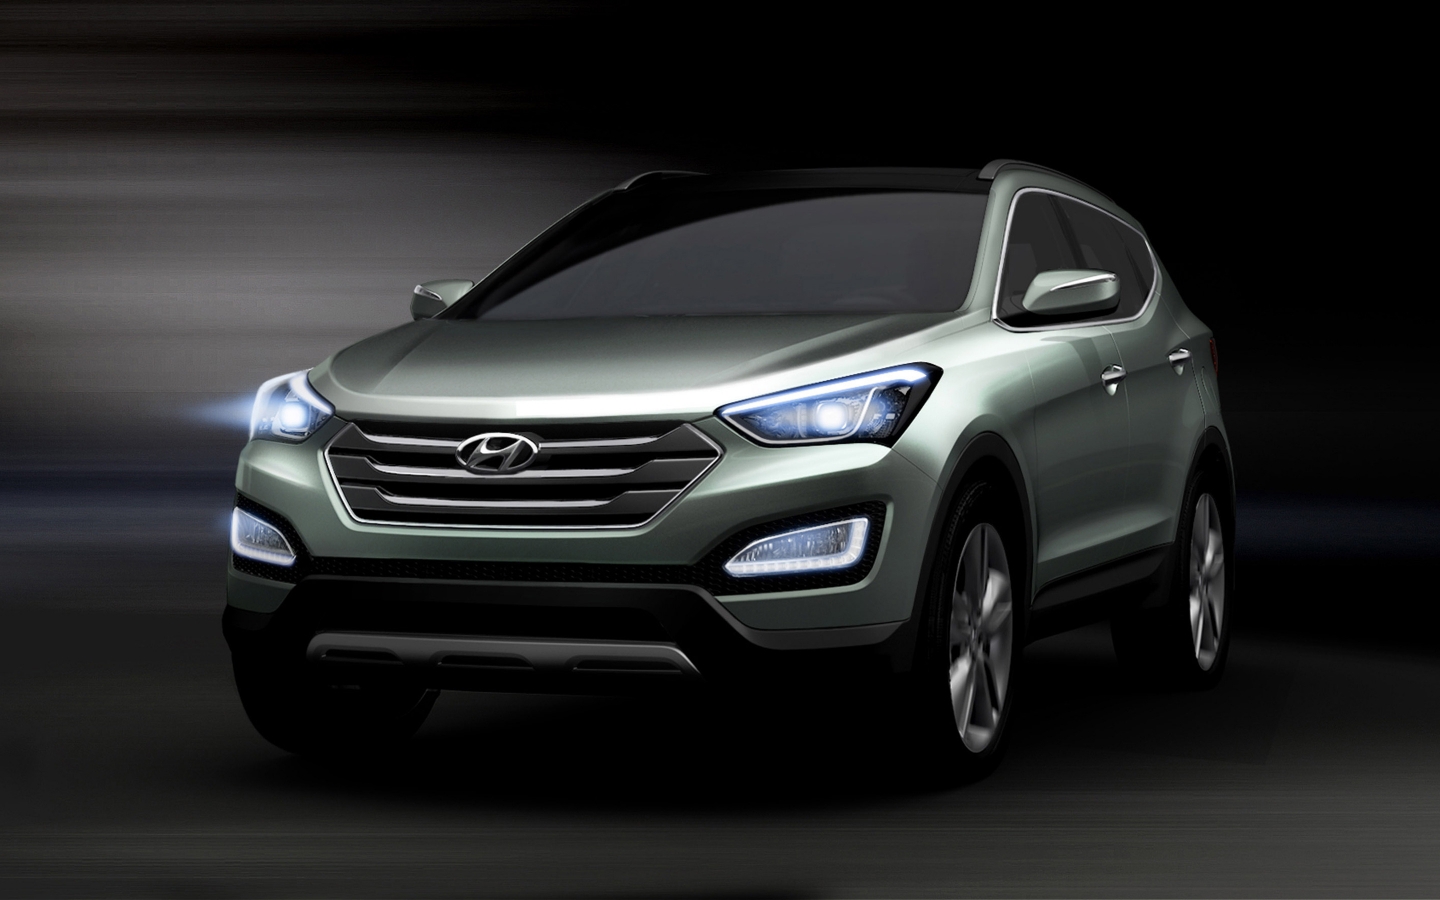 Hyundai Santa FE 2013 Edition for 1440 x 900 widescreen resolution